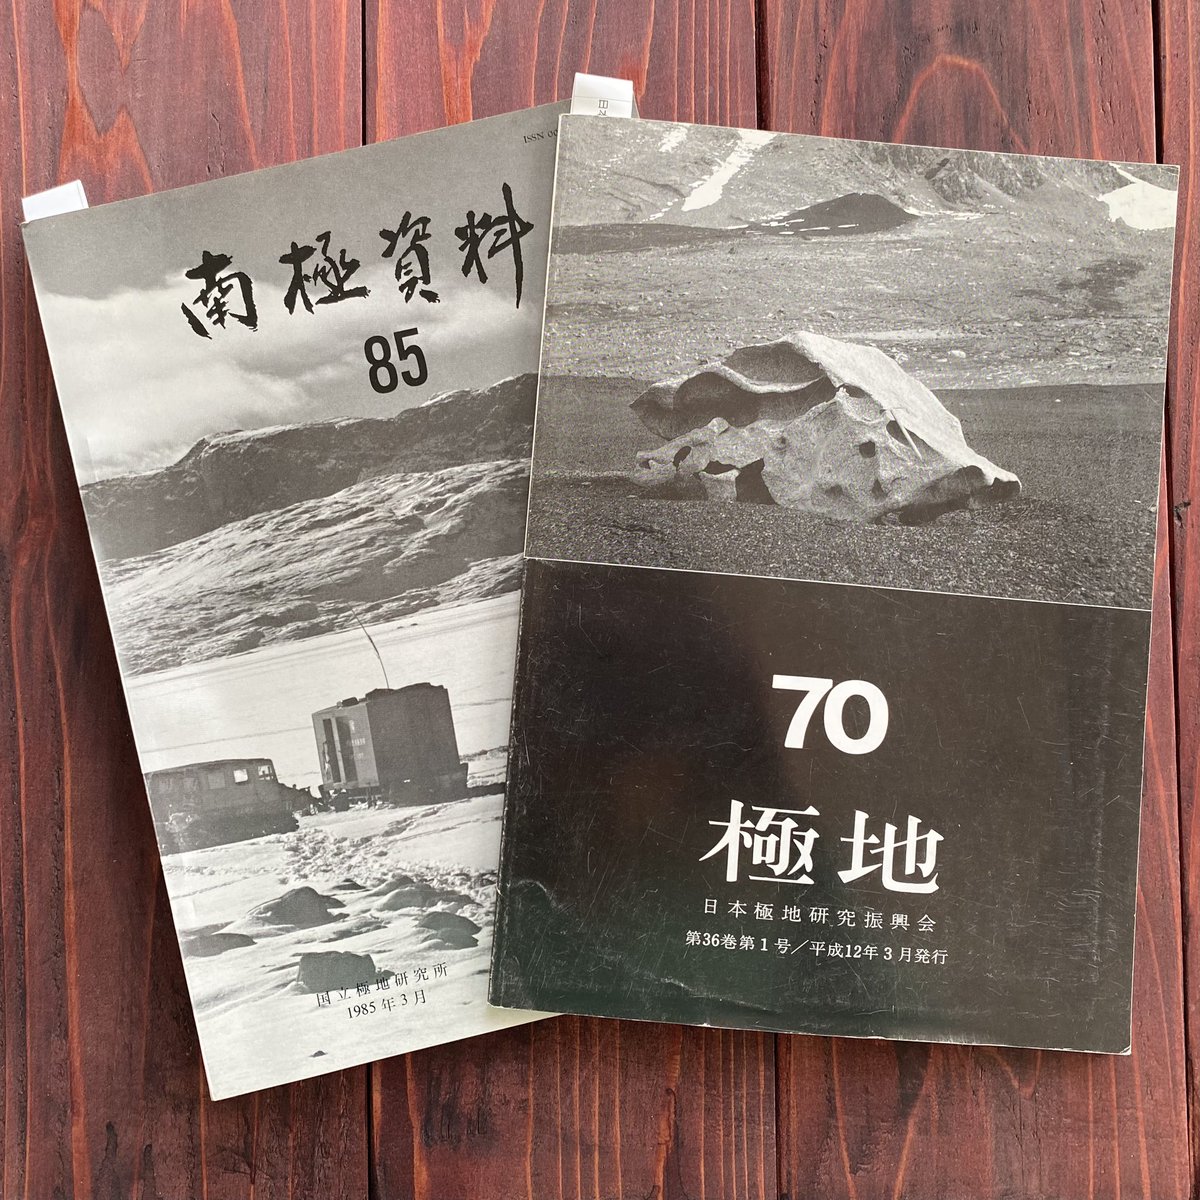 GW期間中に、たくさんの本を寄贈していただきました📚

今では、珍しい昭和30年代の雑誌や、南極の貴重な資料などもございます🌏

是非、お手にとってご覧ください😊
皆さまのご来店、お待ちしております🌊

#detohamabooks #detohama #seaofjapan #katagami
#akita #usedbooks 
#潟上市  #秋田